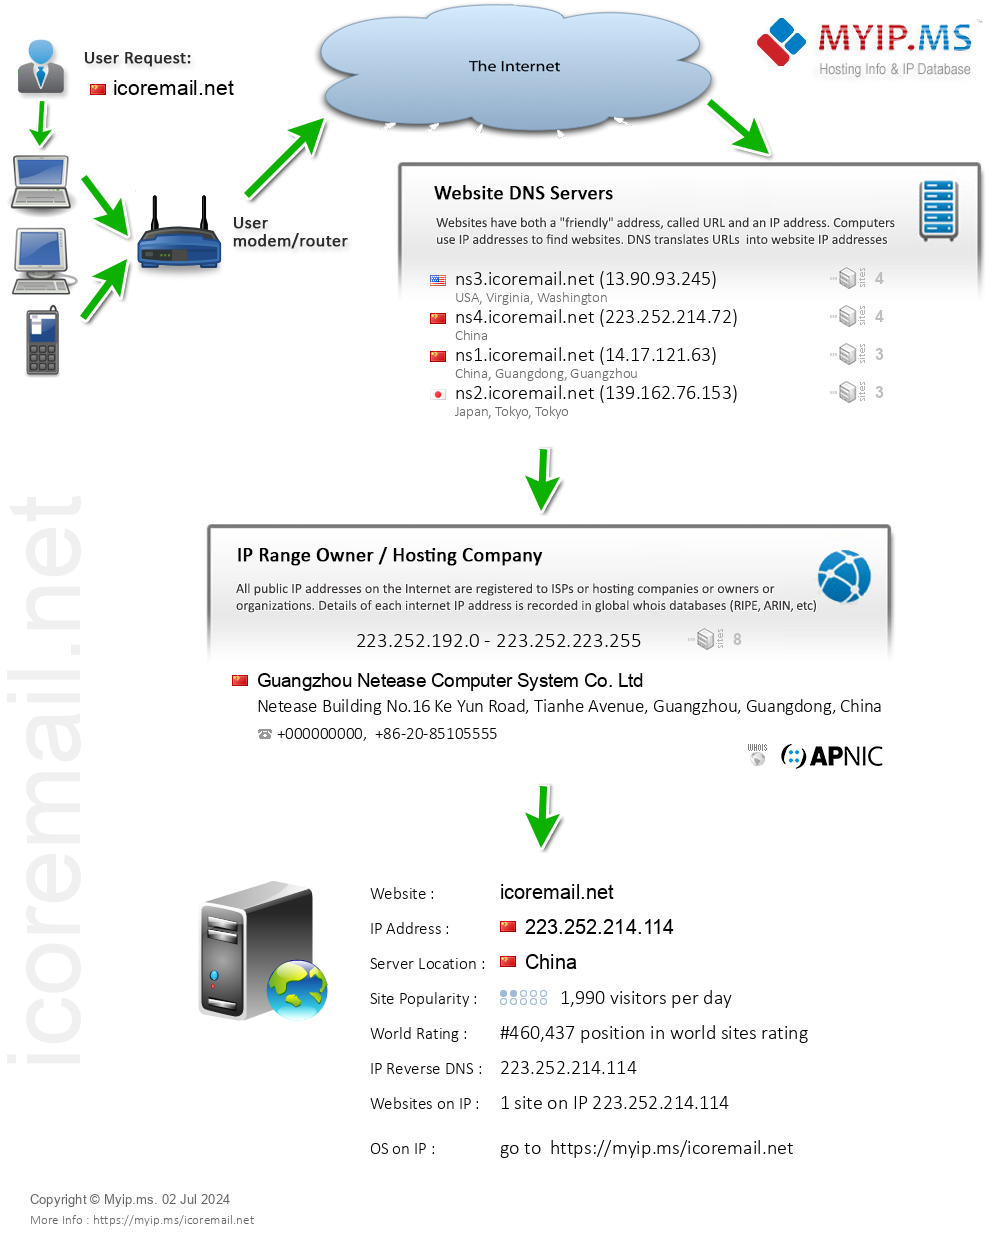 Icoremail.net - Website Hosting Visual IP Diagram